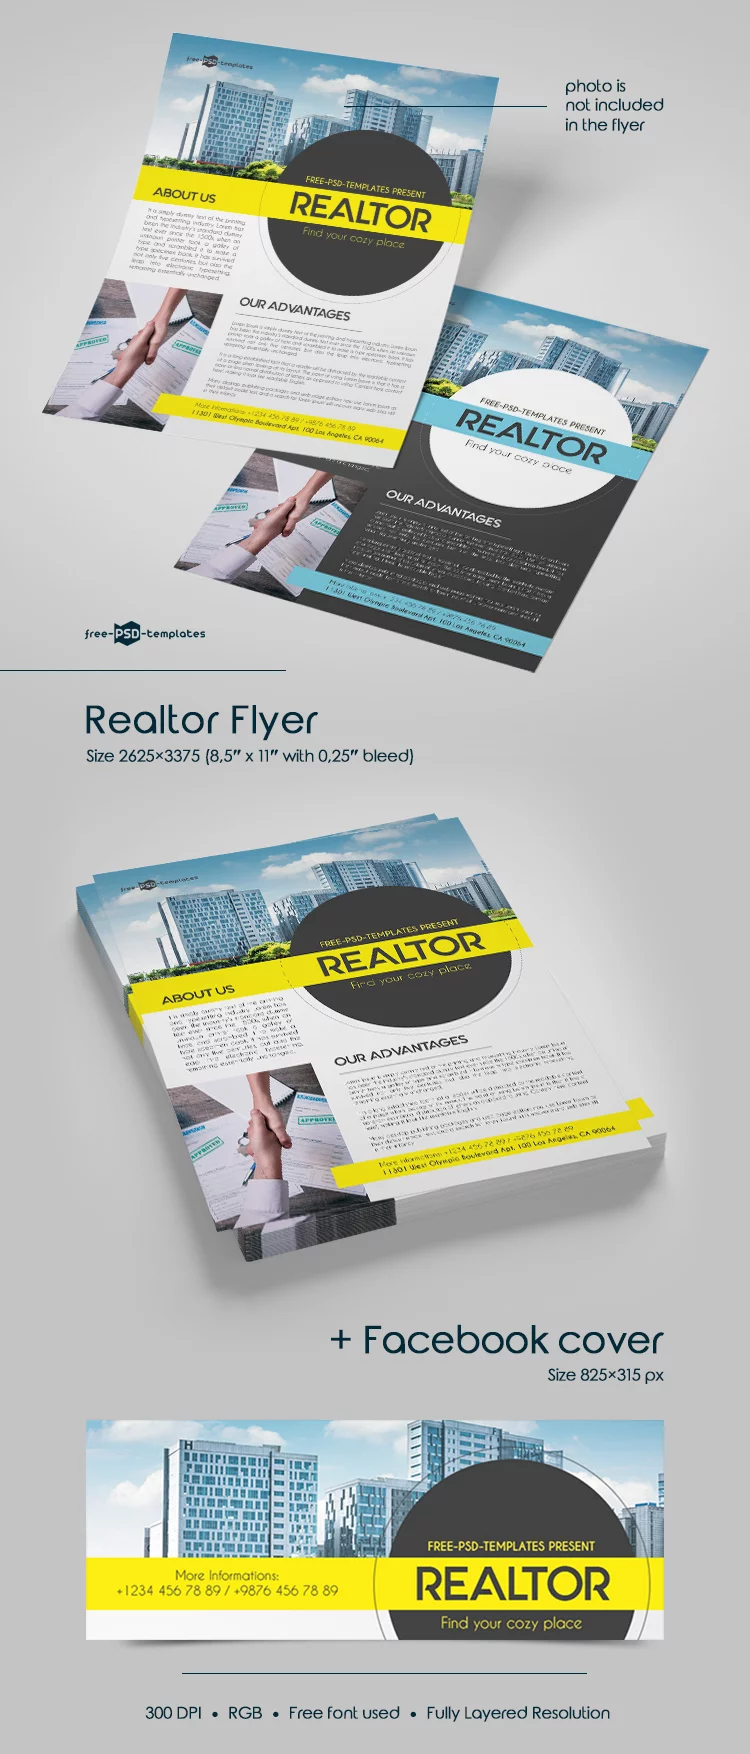 Free Realtor Flyer in PSD